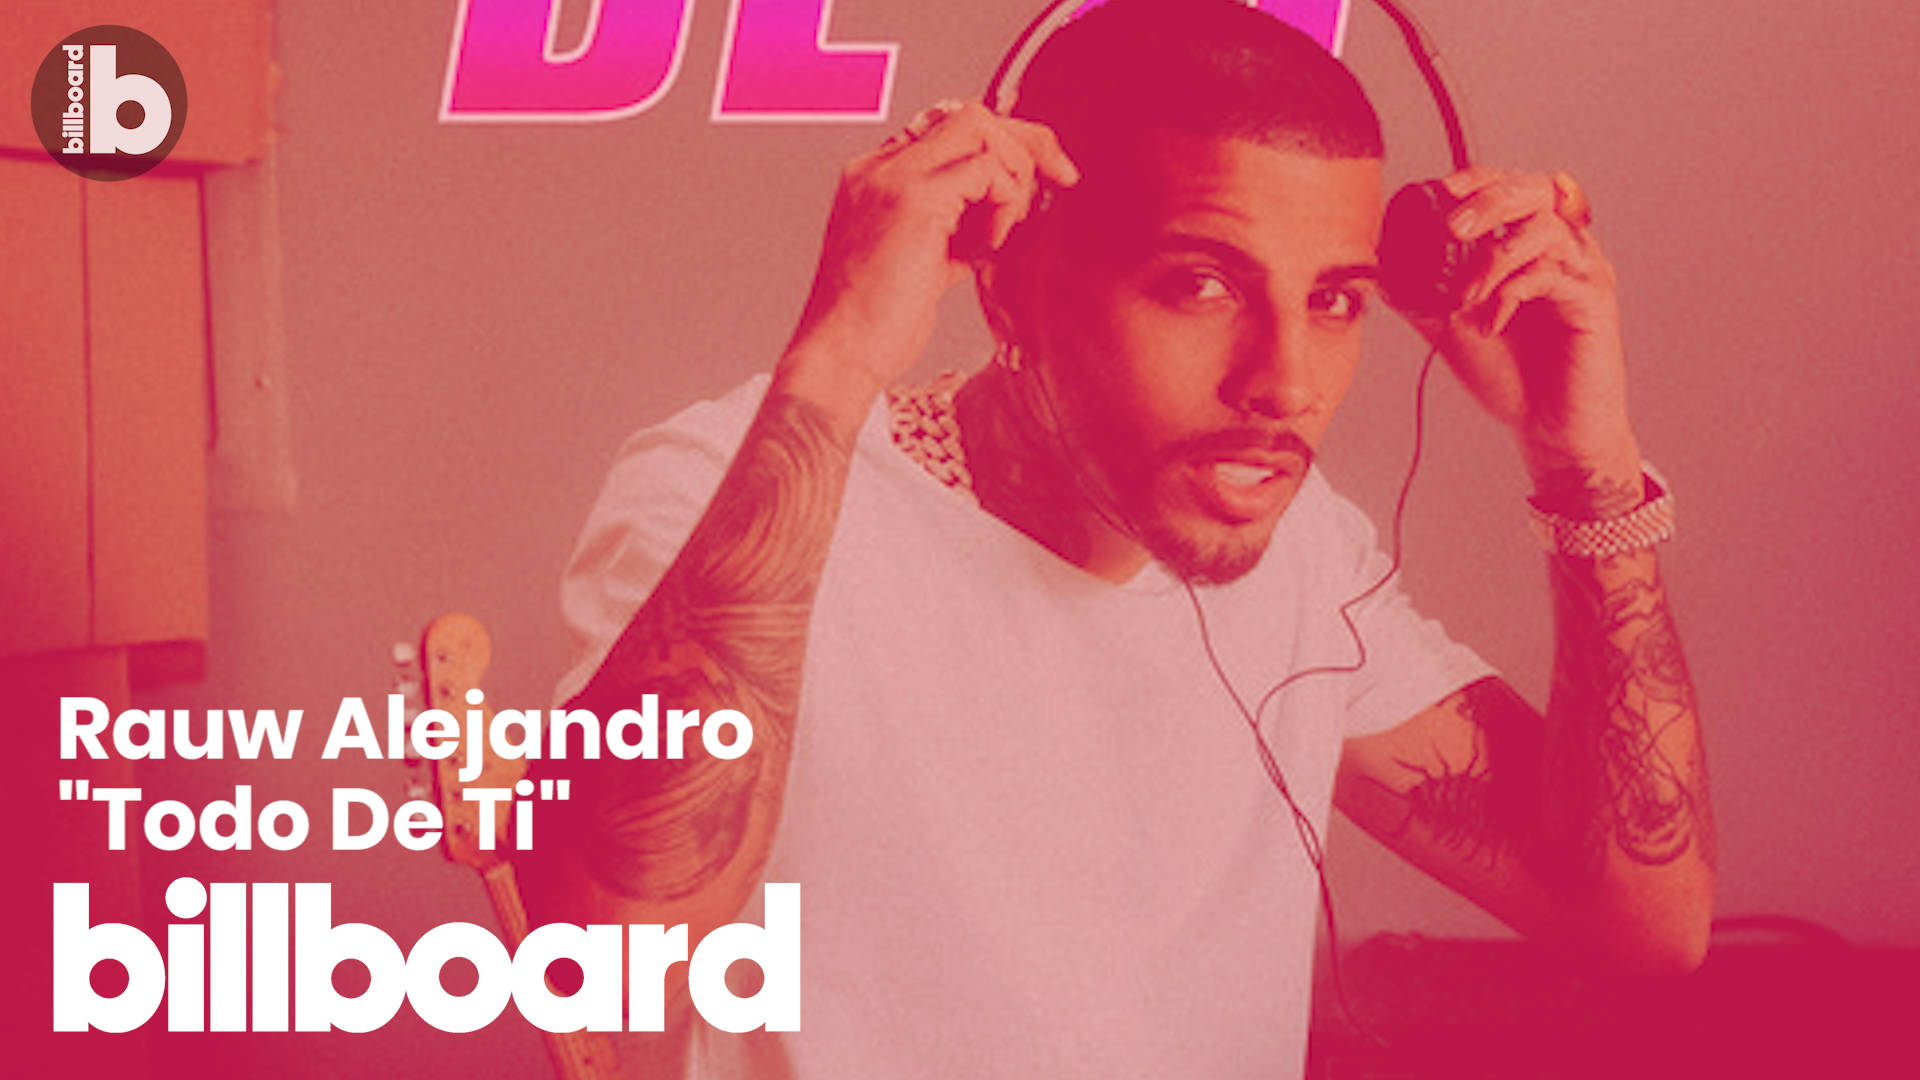 Rauw Alejandro Alt fra dig Billboard ♫ Wallpaper